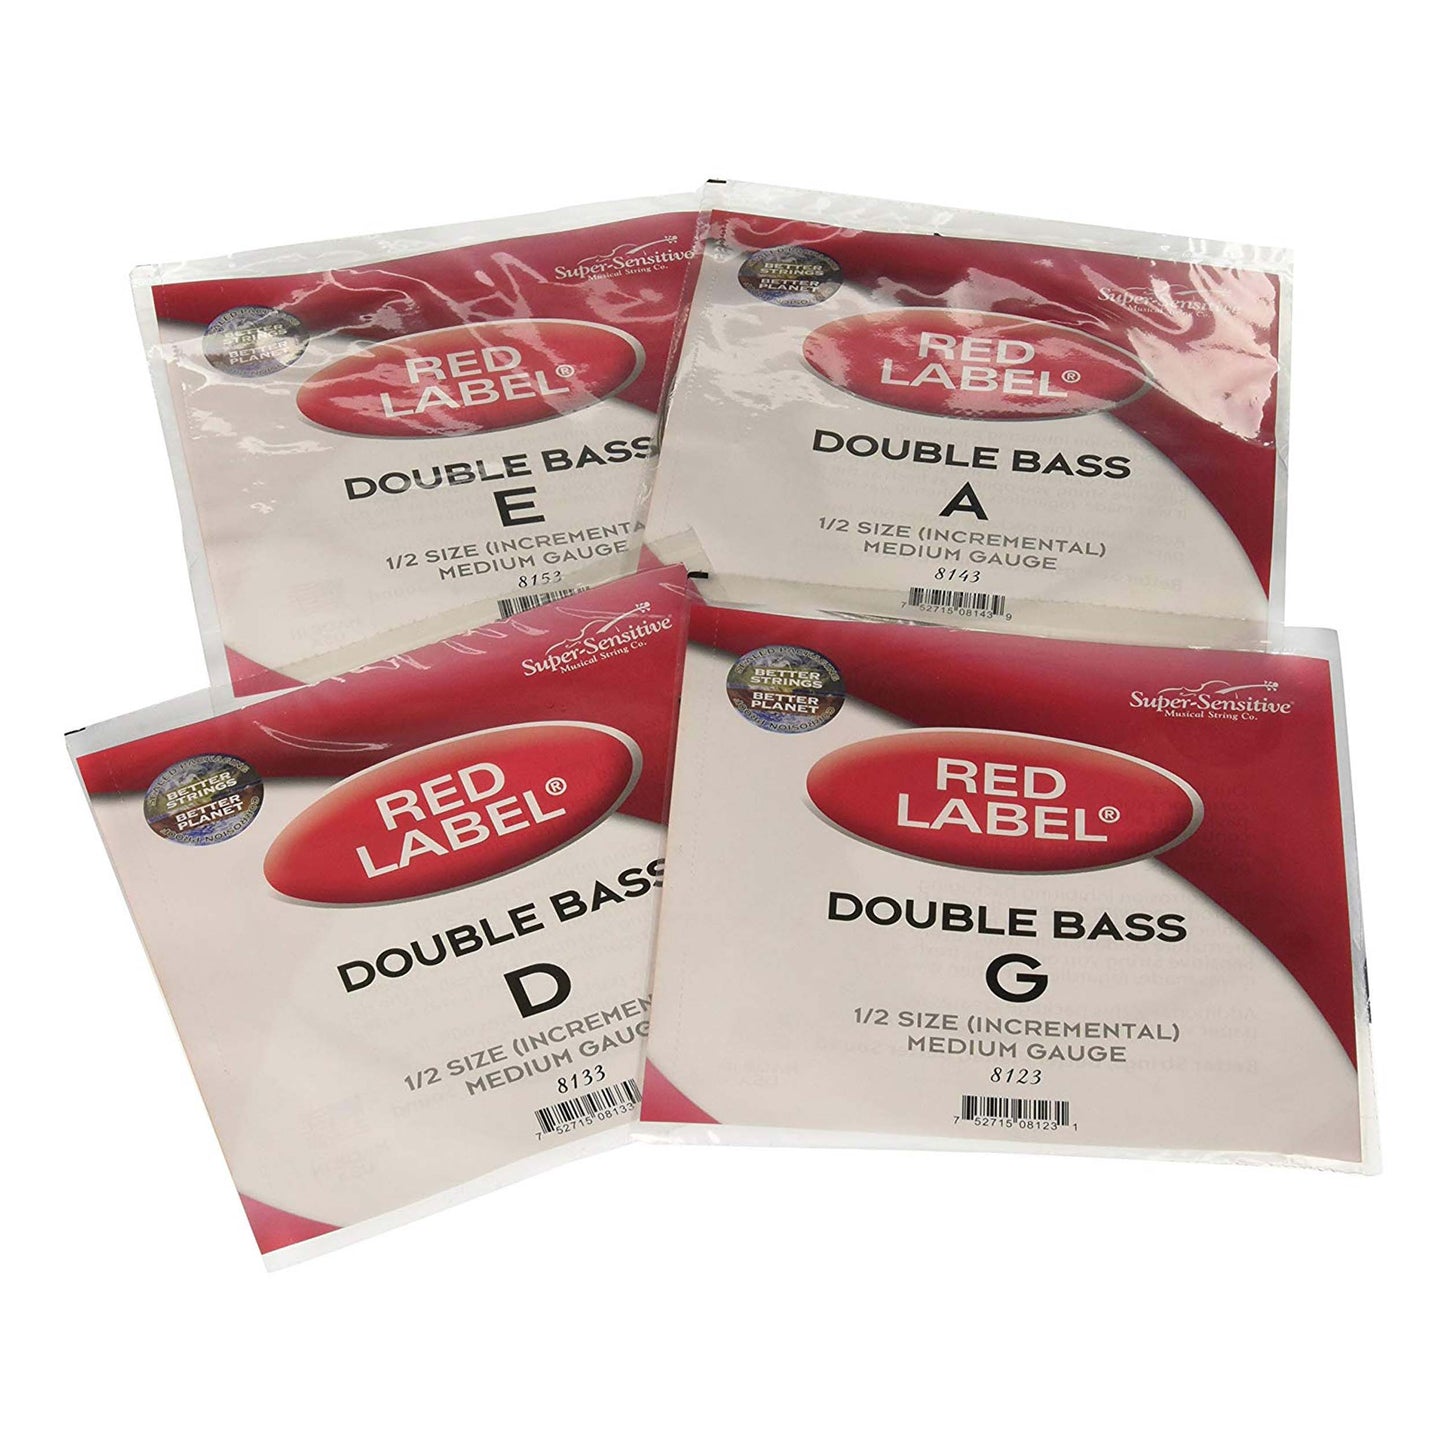 Super Sensitive 8103 Red Label Upright Bass String Set - G, D, A, E - Nickel